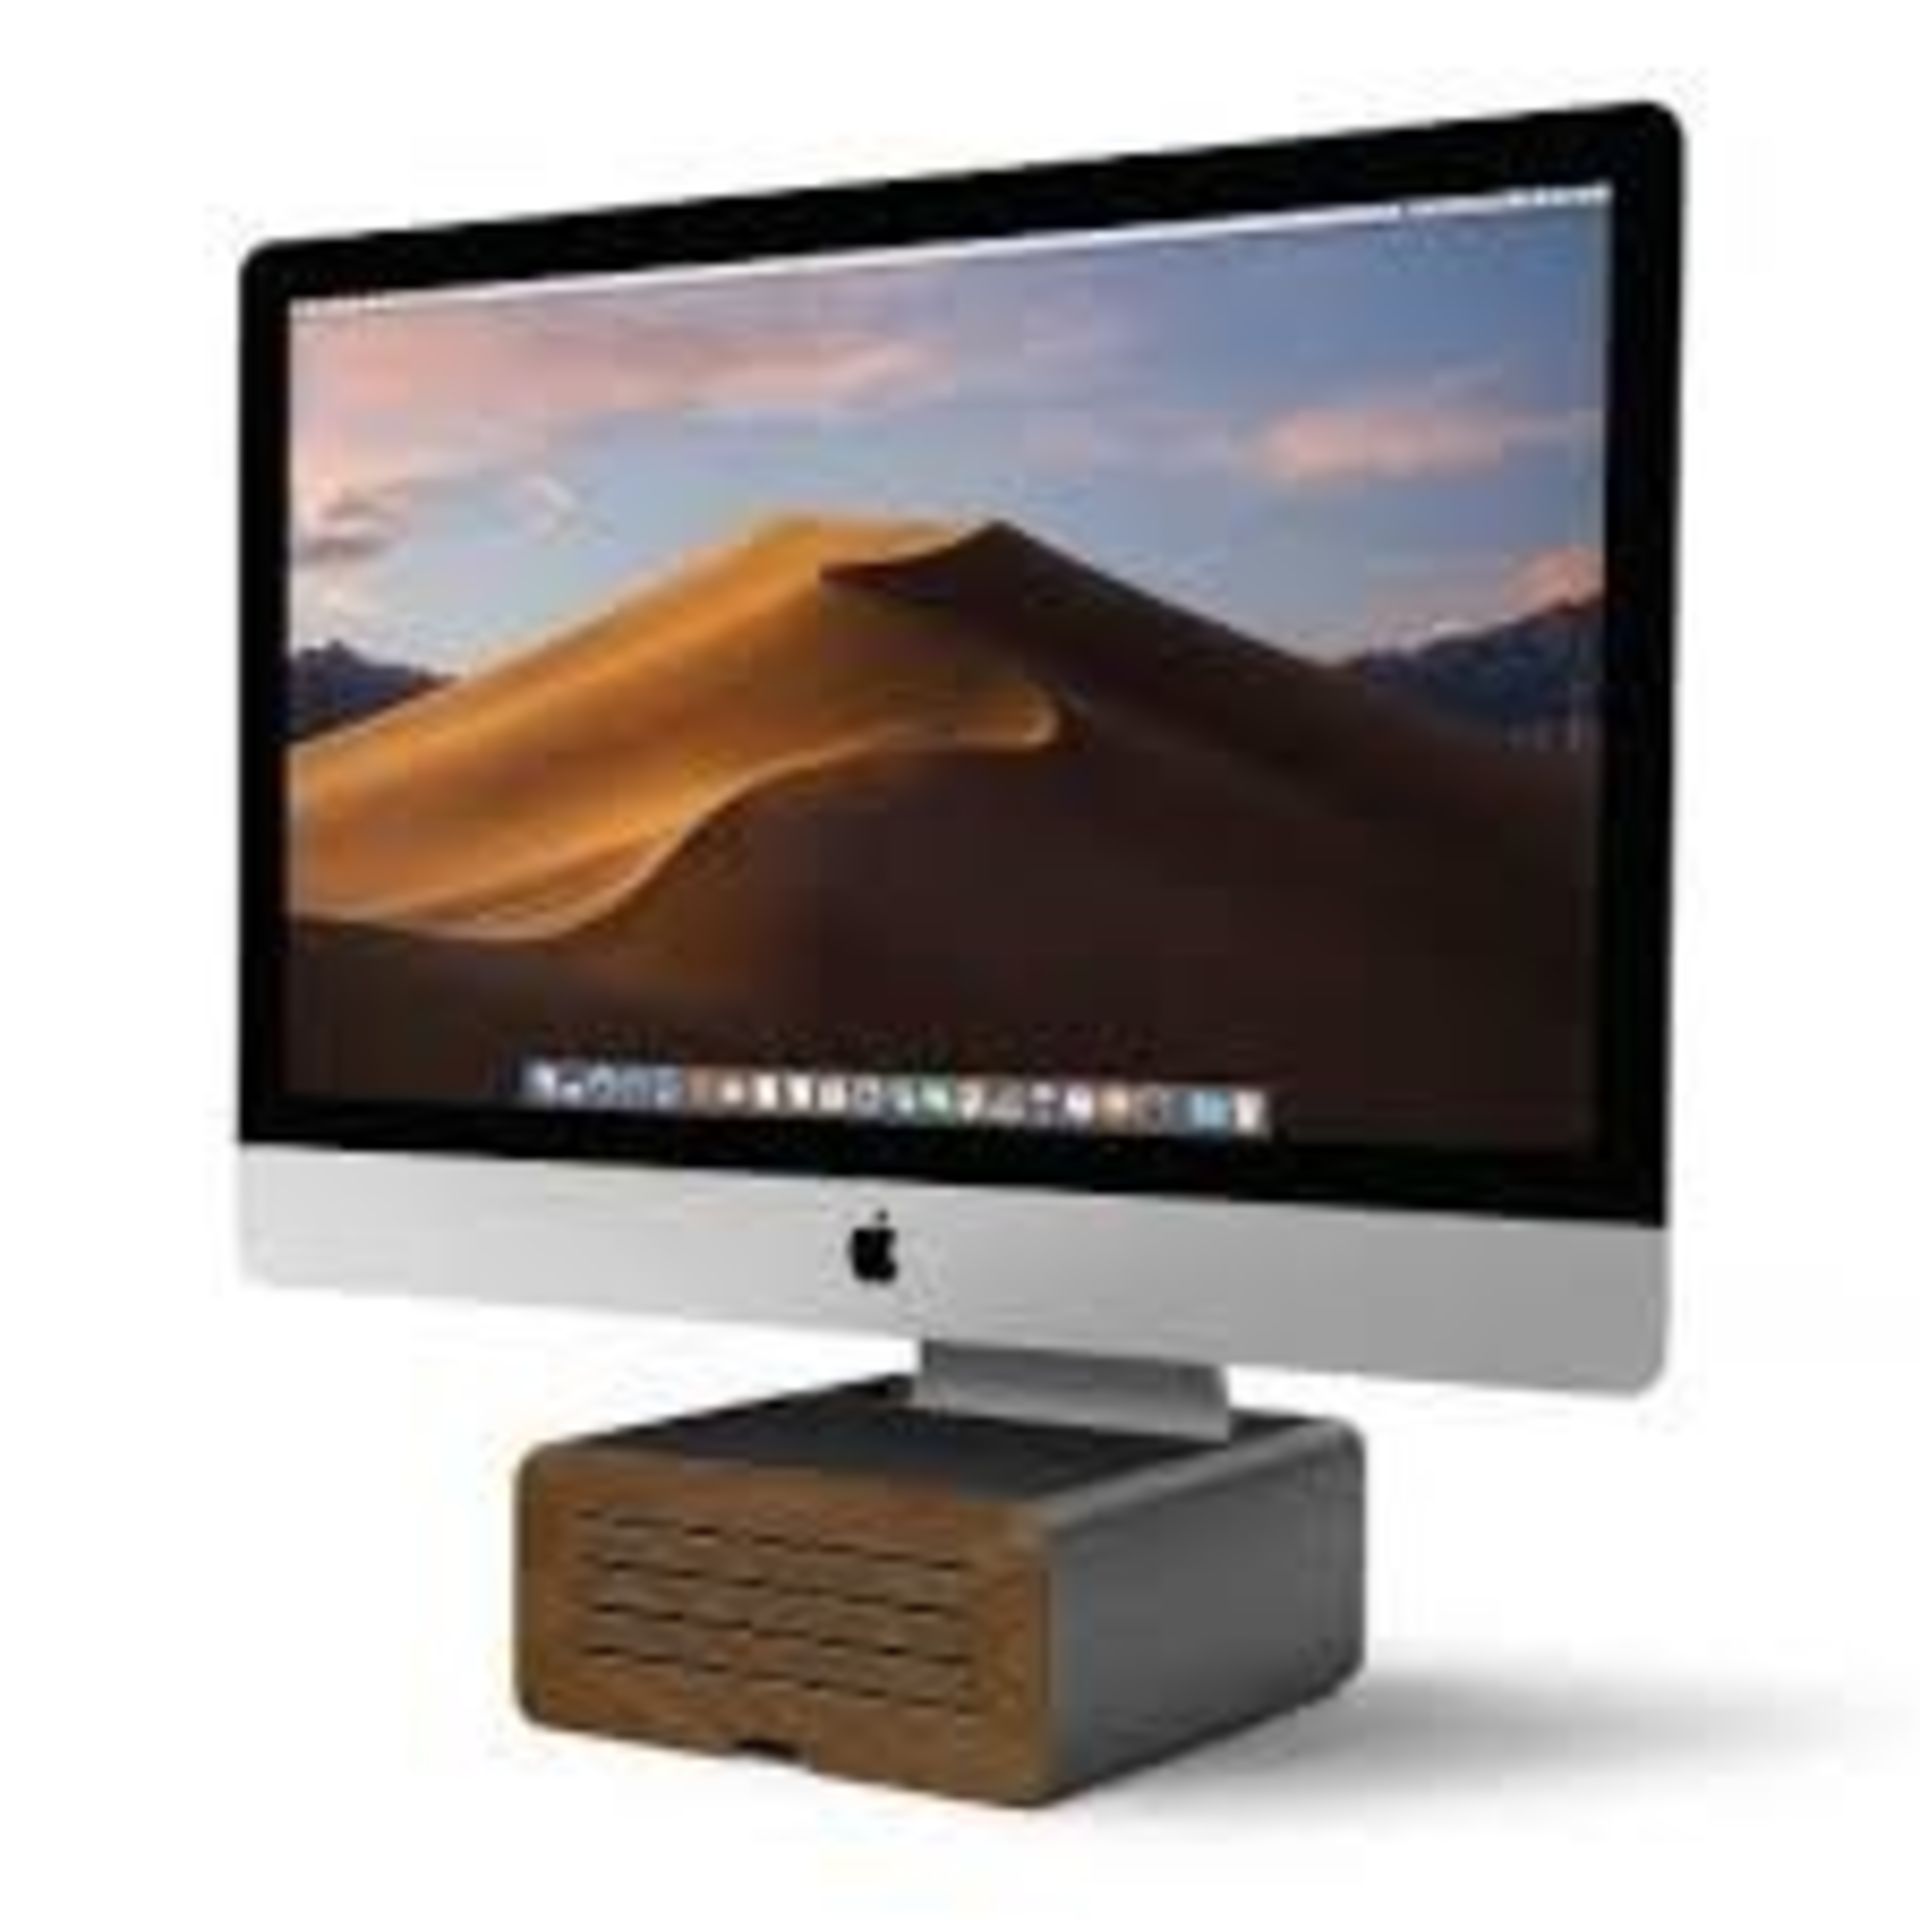 Box 12 Self High Riser Pro For iMac And Displays Monitor Riser